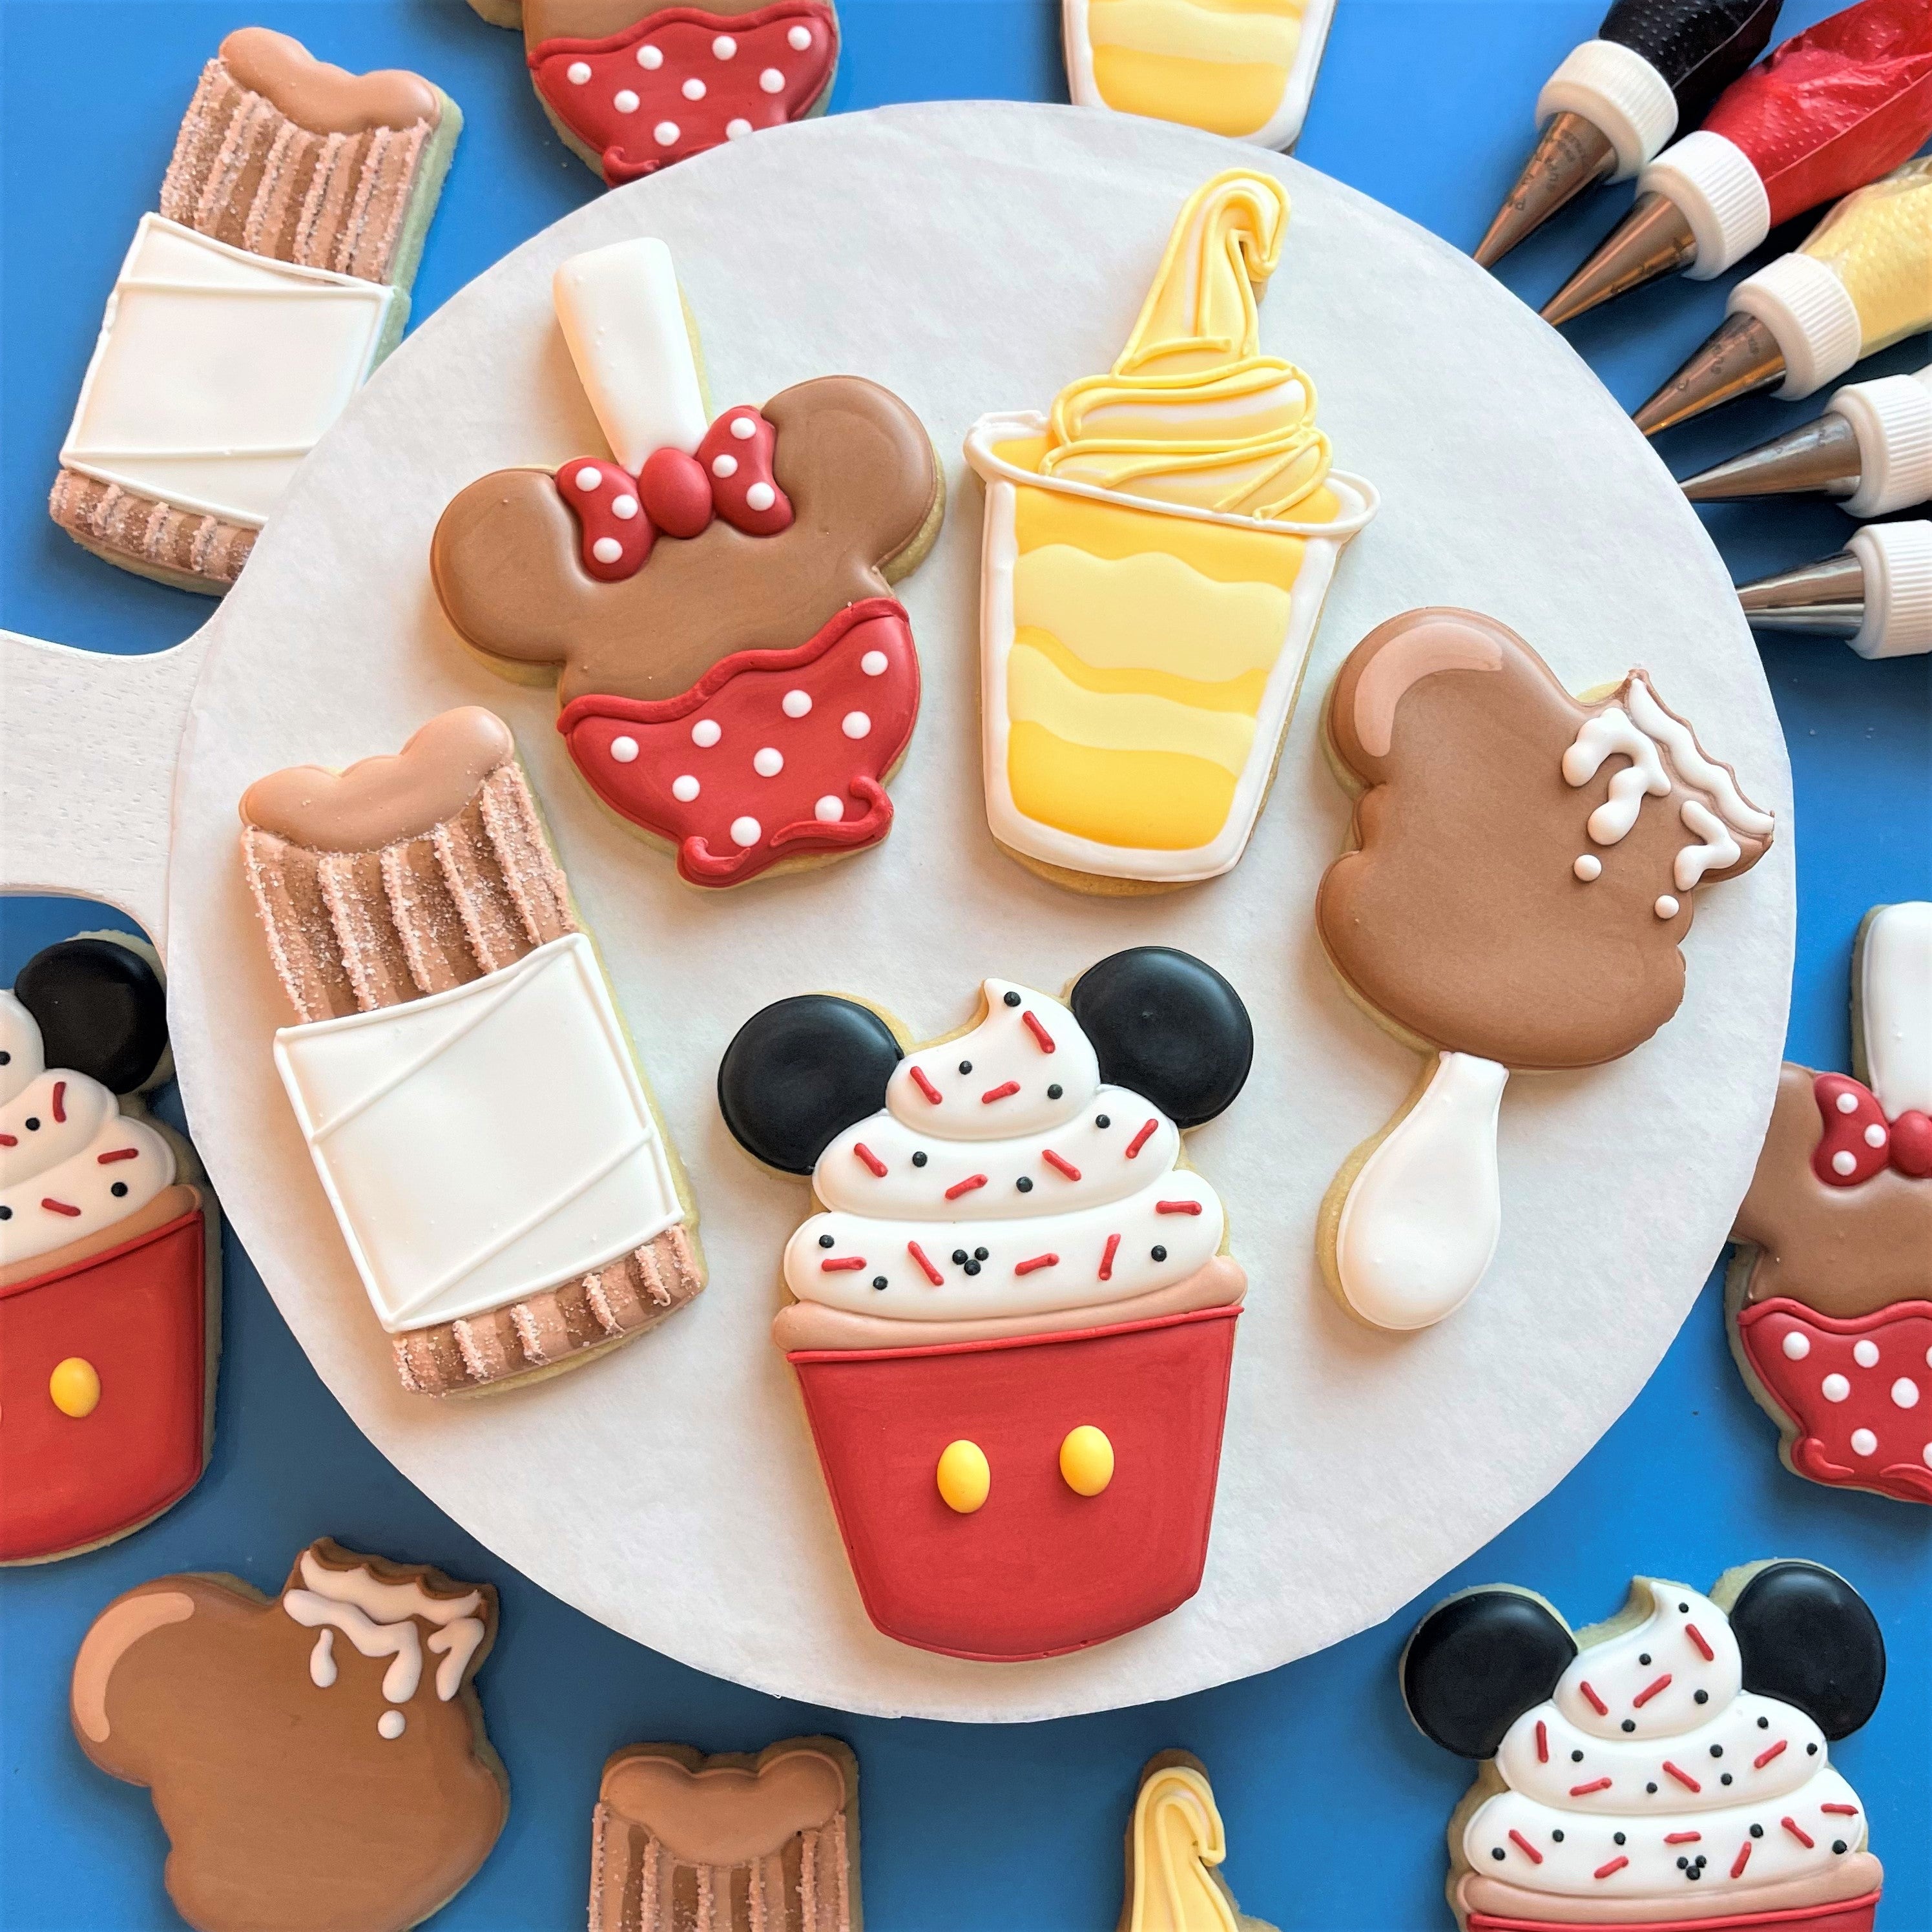 Birthday Cookie Decorating Kit – The Flour Box